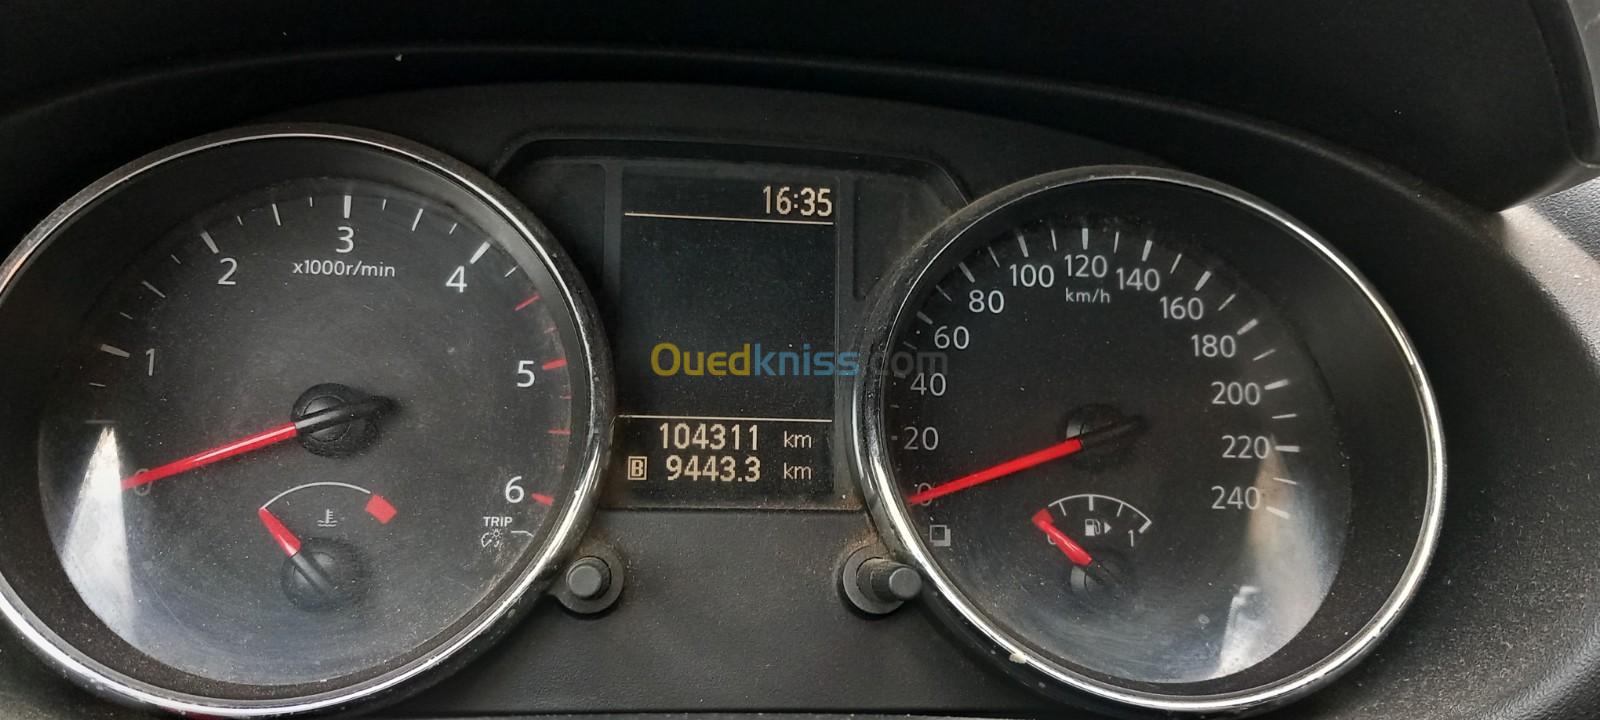 Nissan Qashqai 2016 +2 Tekna